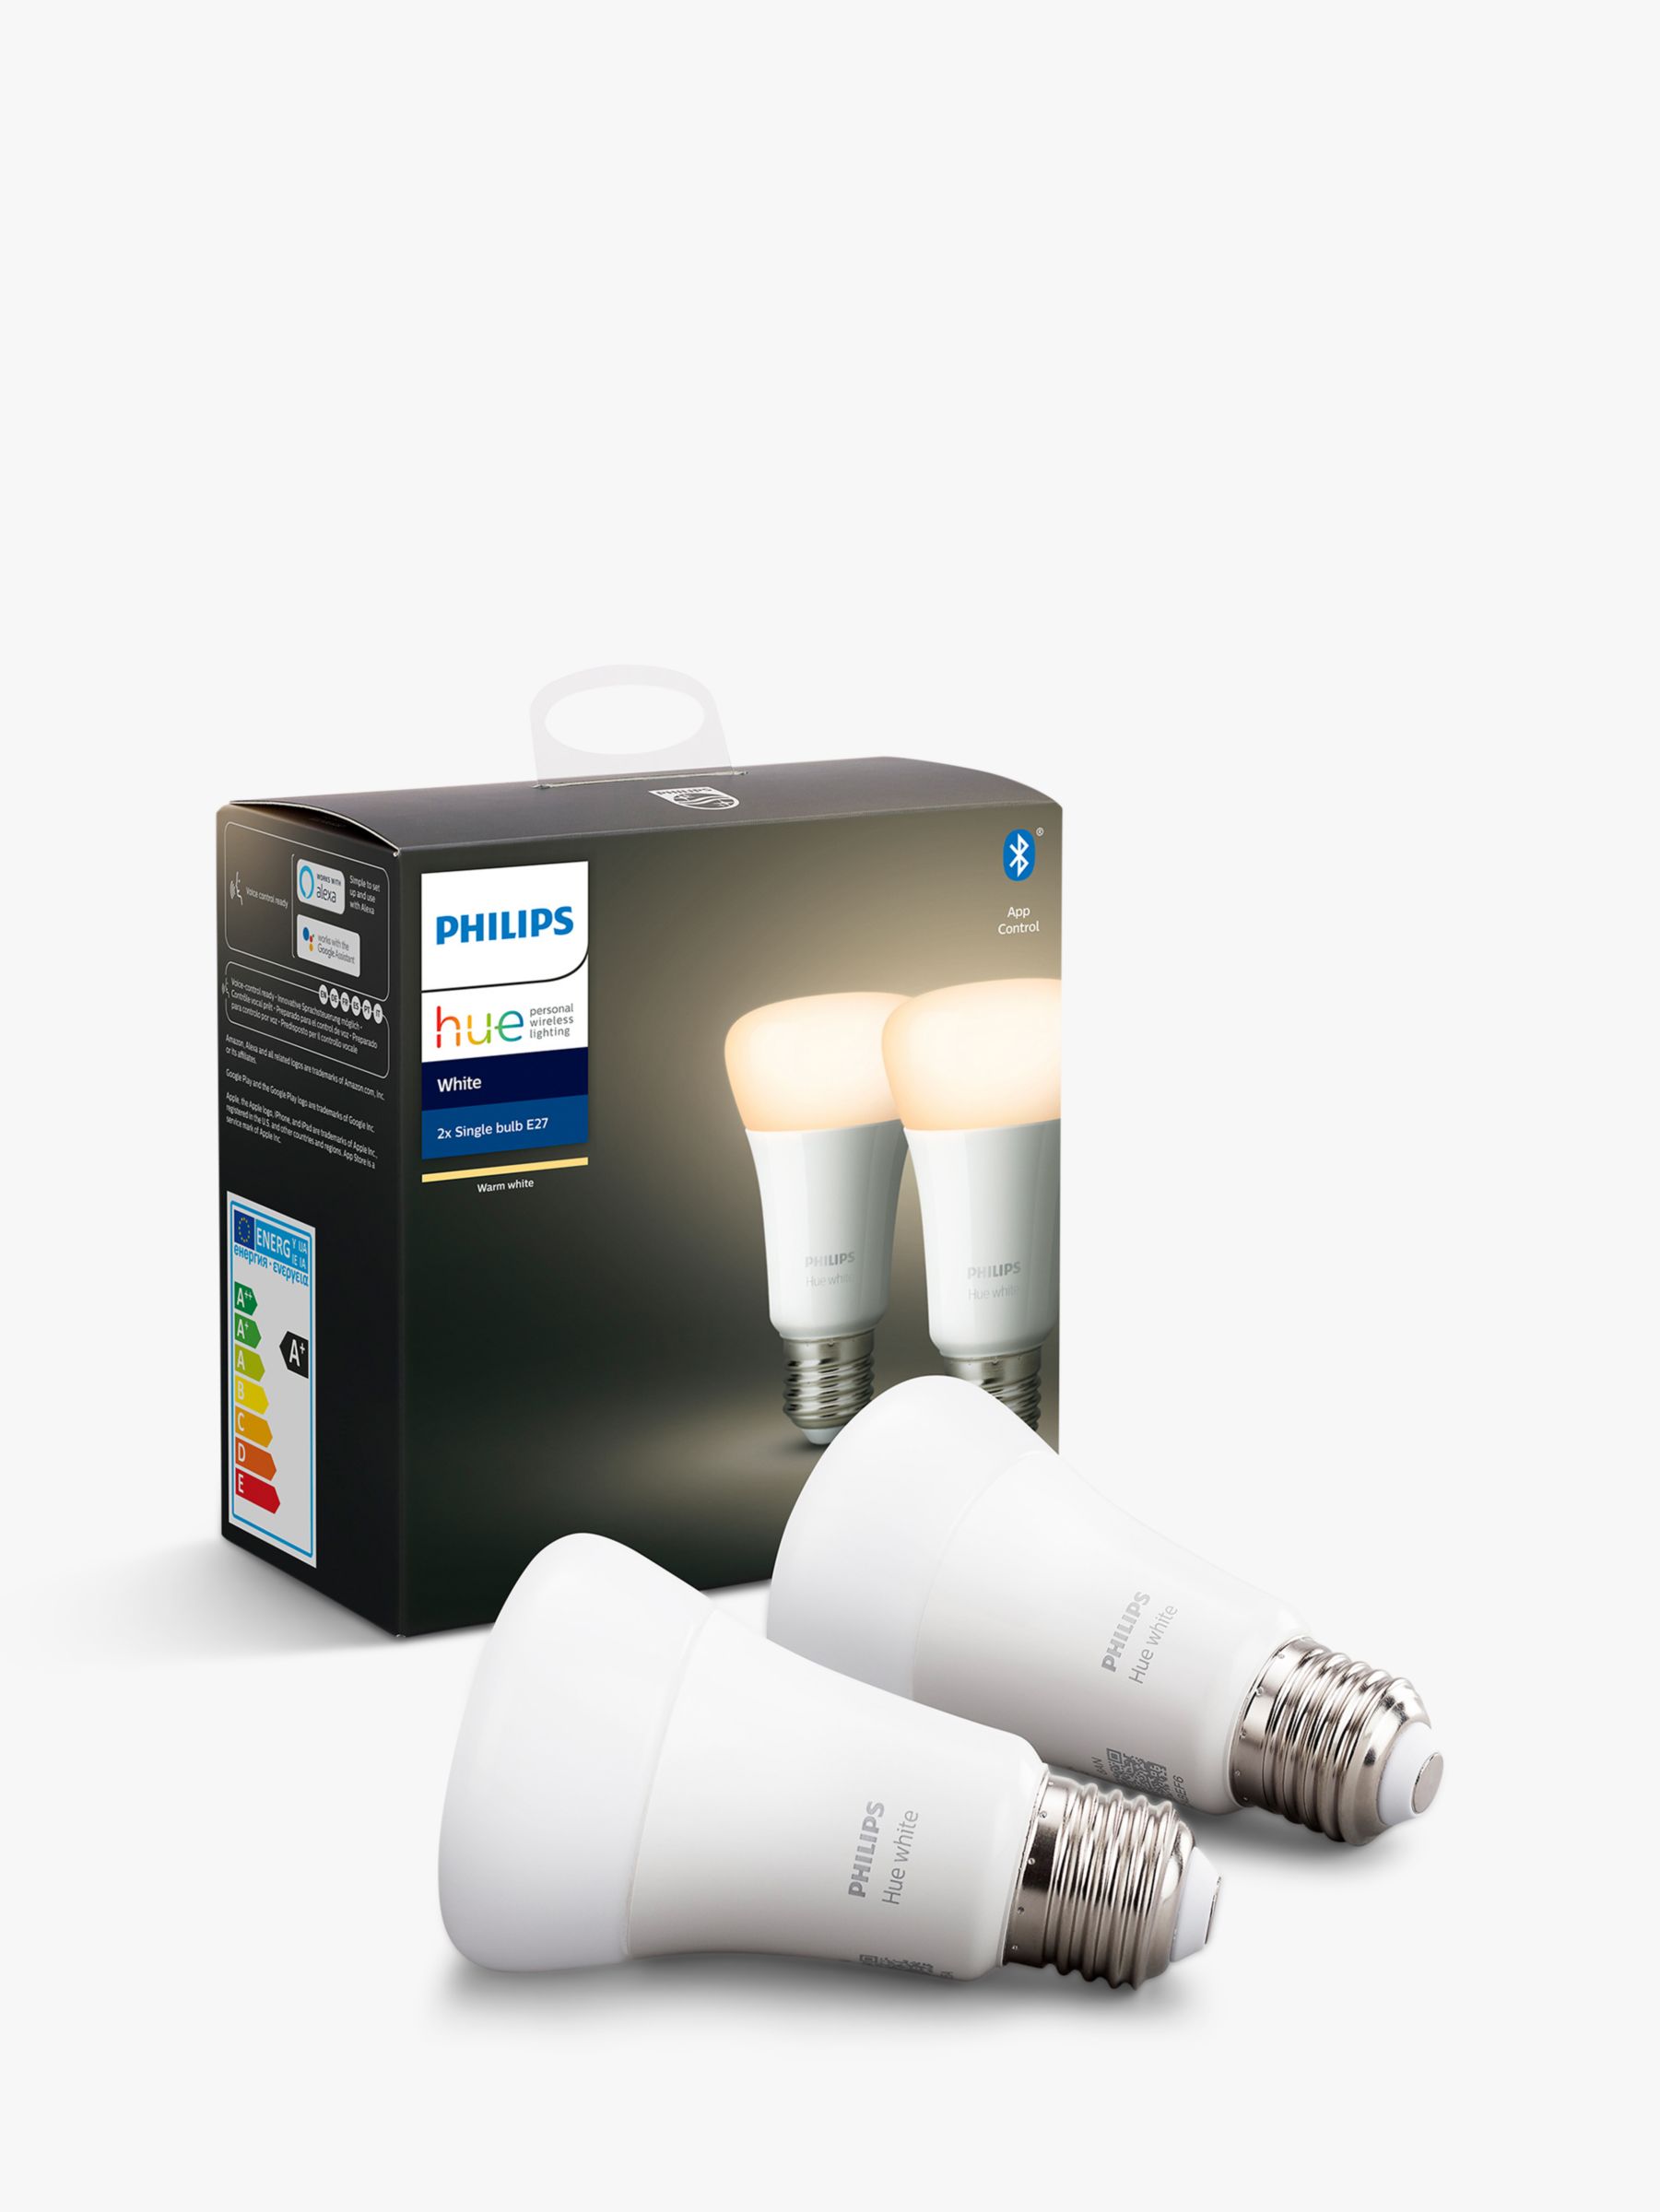 led light bulb with bluetooth